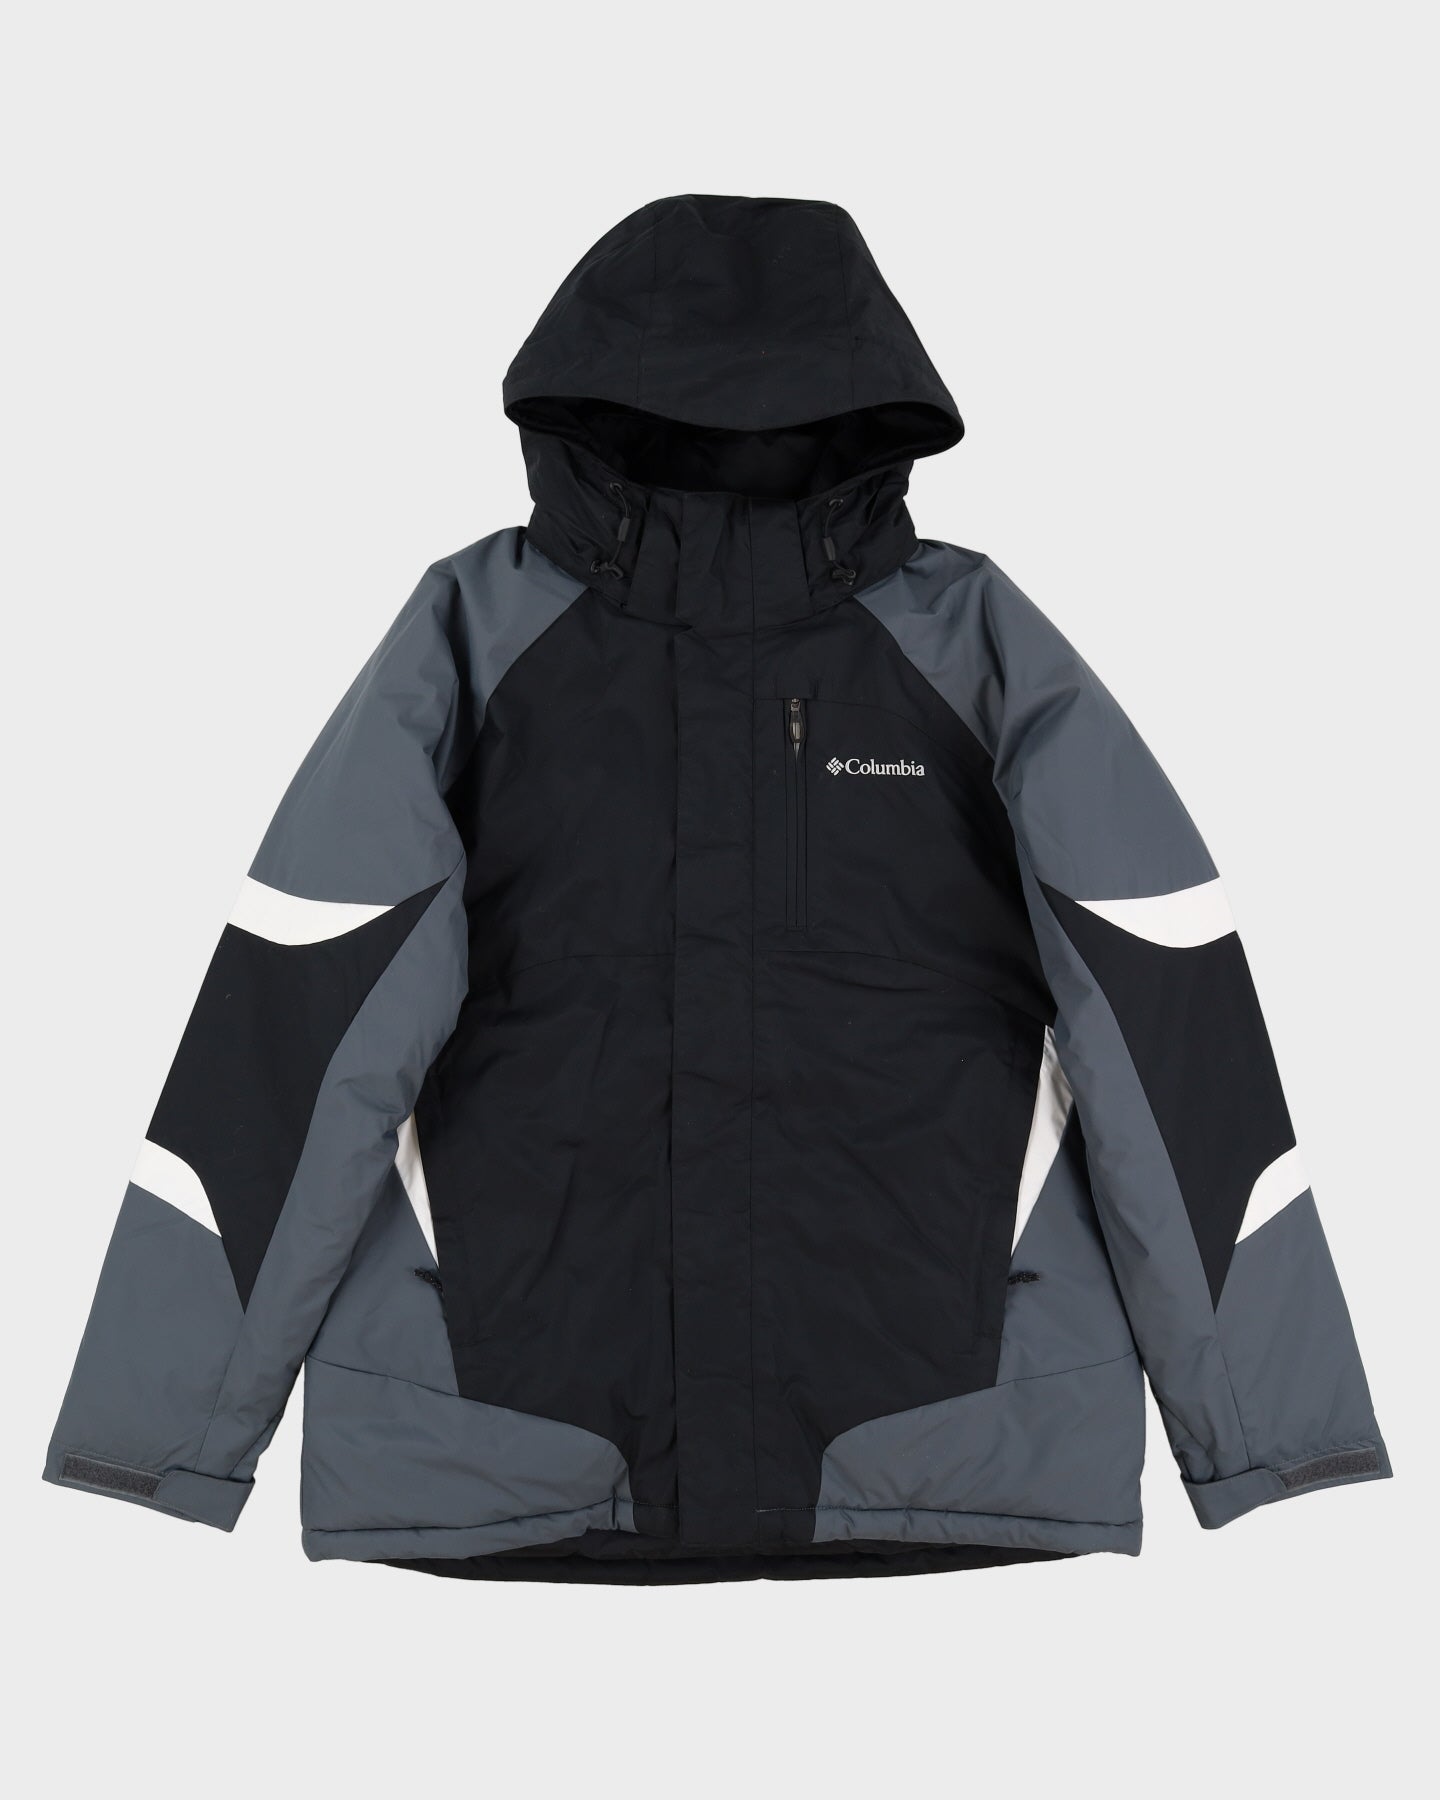 Columbia Black / Grey Two Tone Hooded Ski Jacket - L